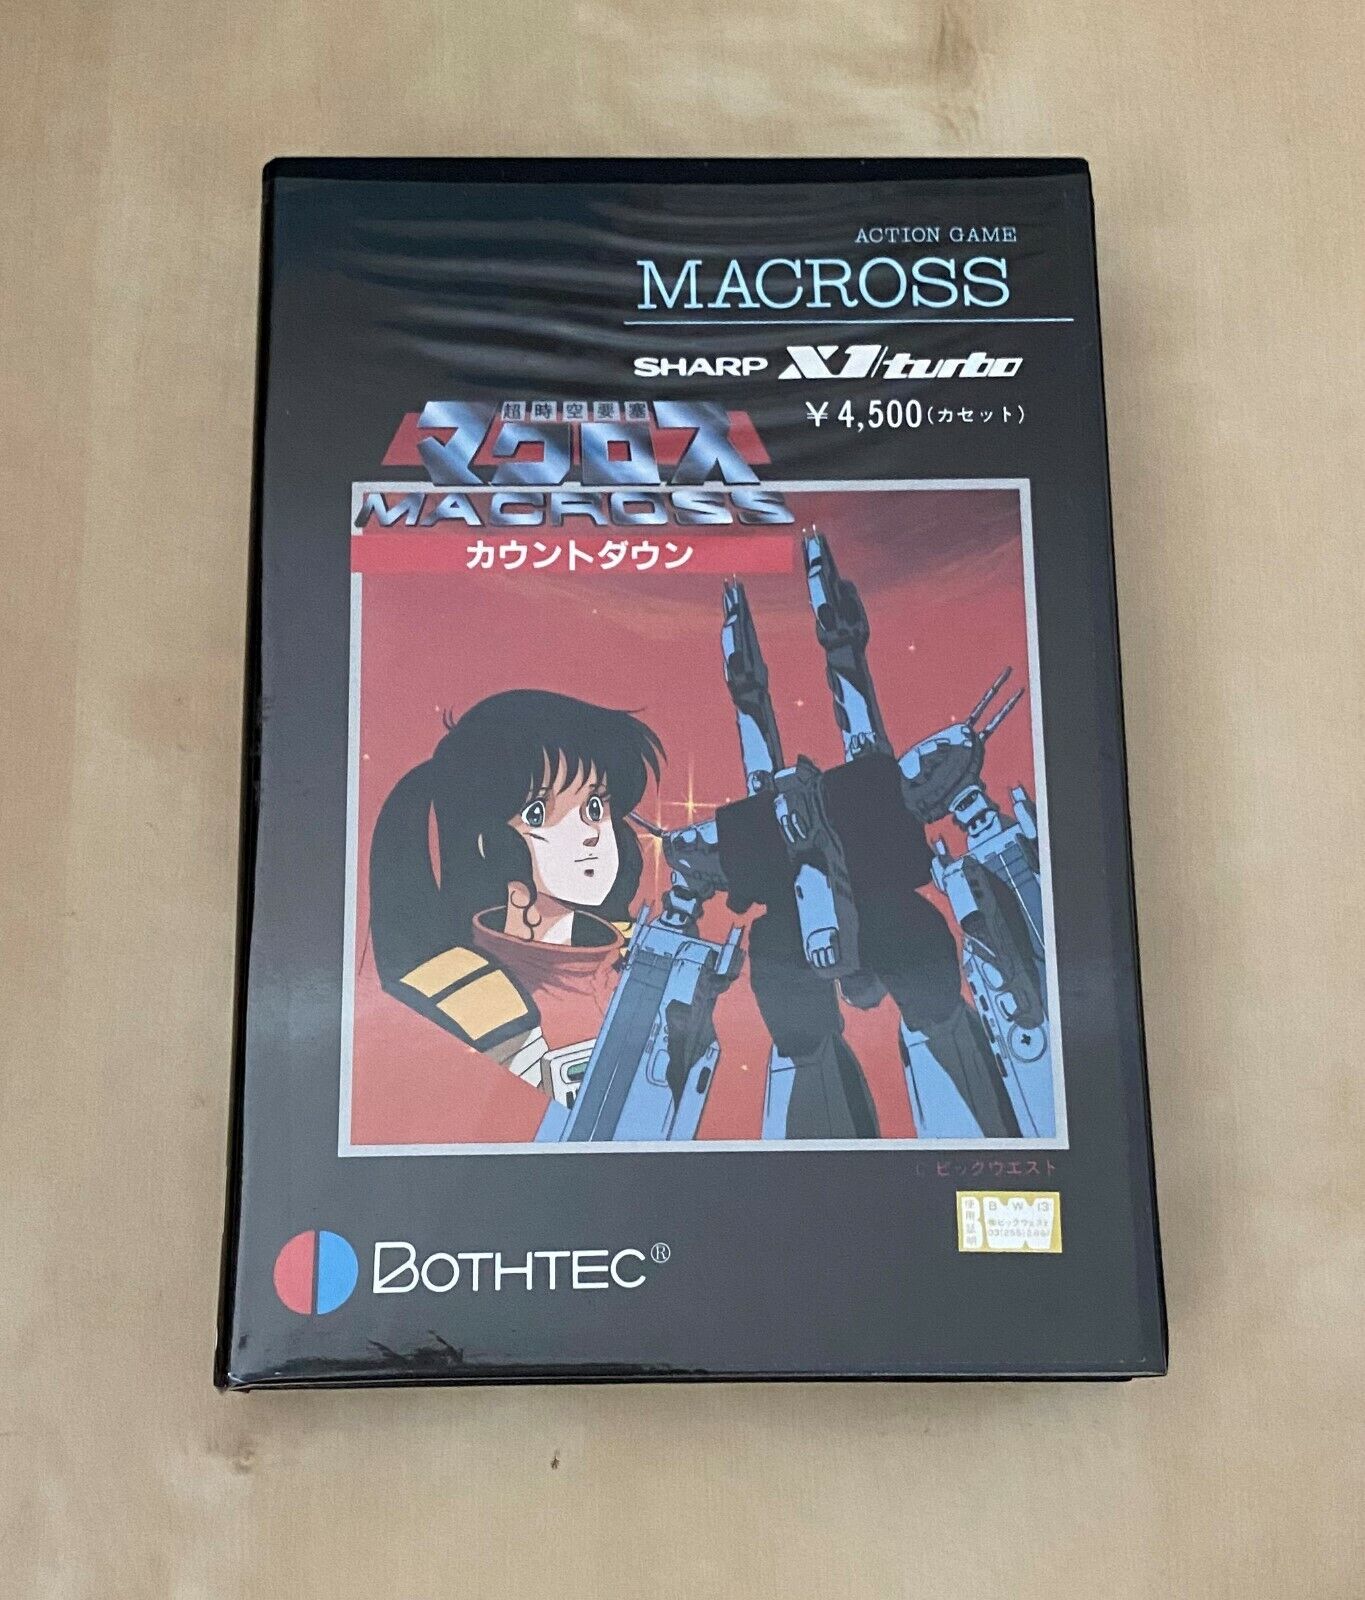 Super rare Japan Import Original boxed complete CIB Sharp X1 game Macross tested